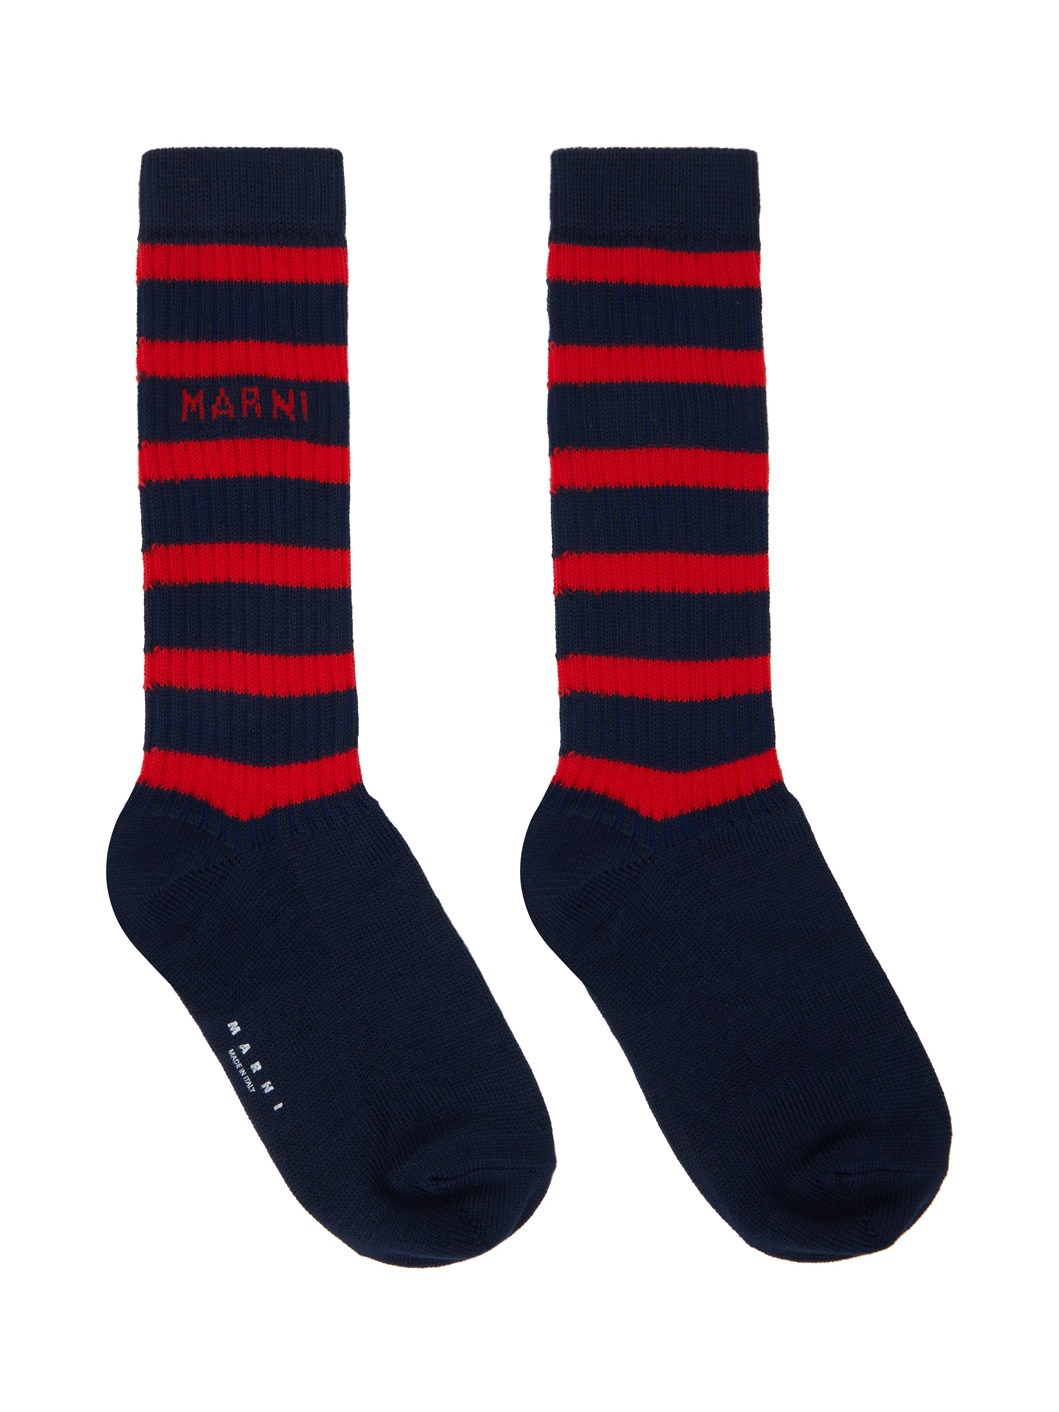 Navy Striped Socks - 1